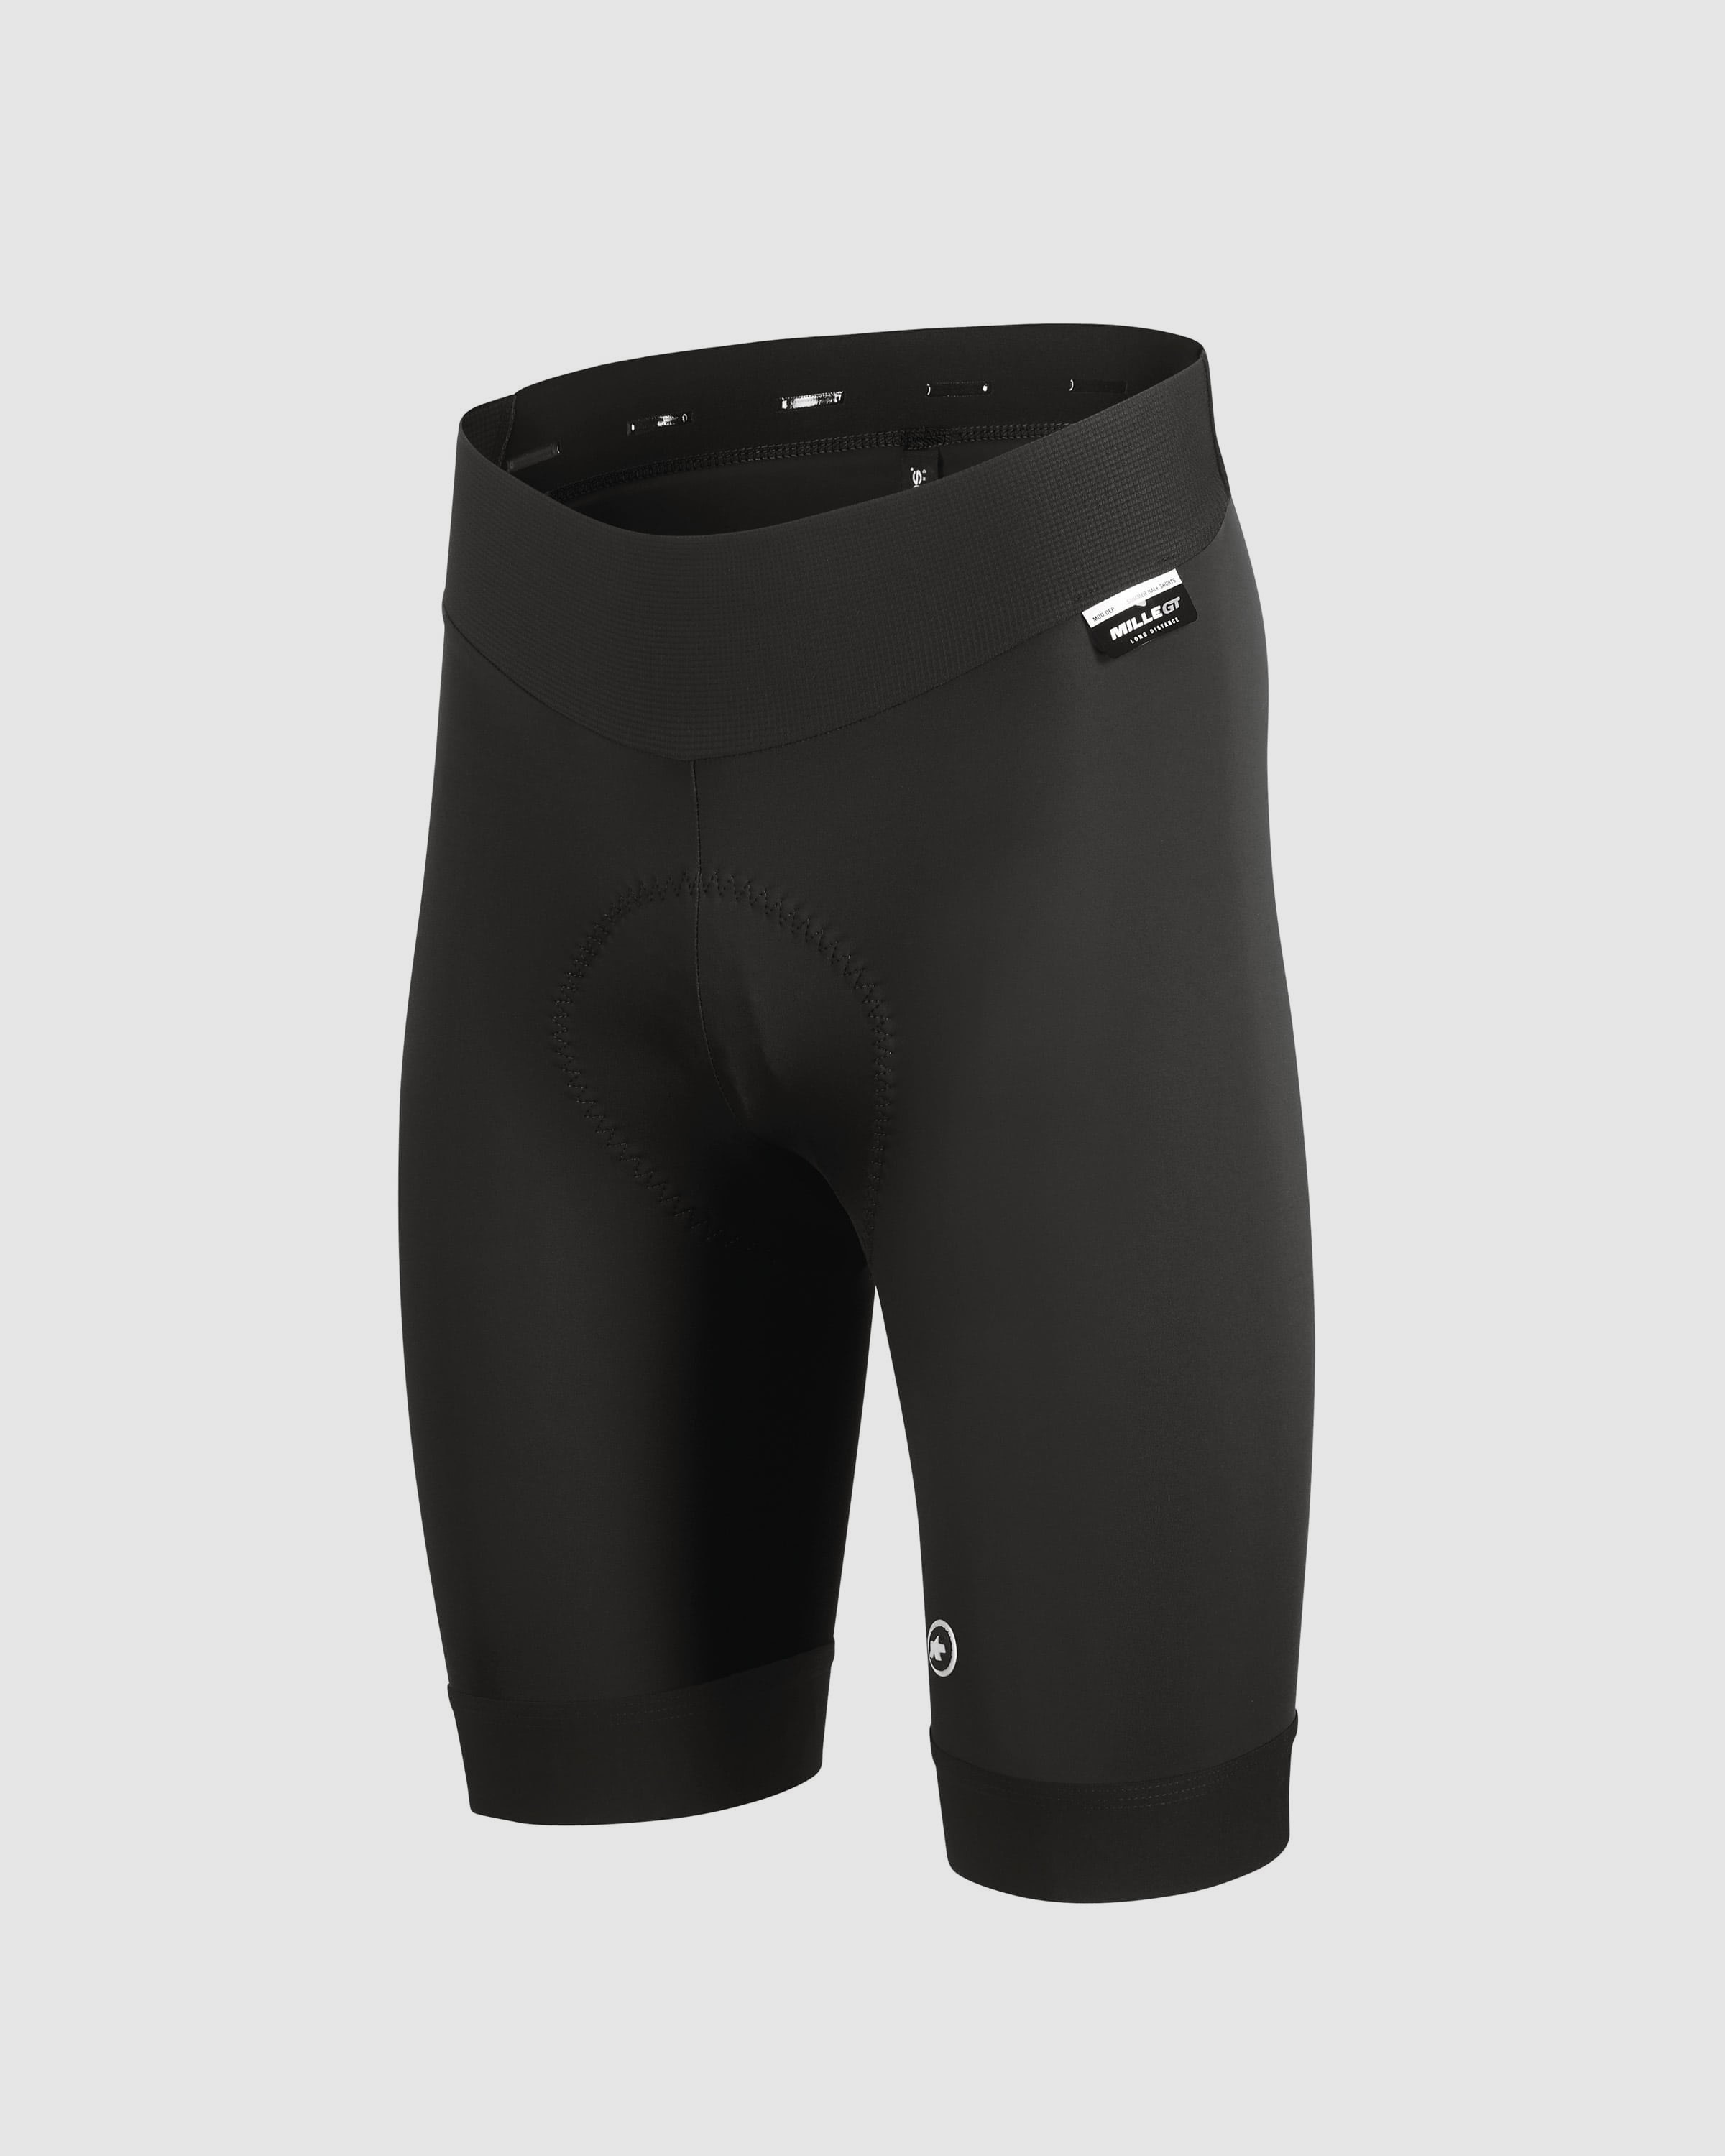 MILLE GT Half Shorts, blackSeries » ASSOS Of Switzerland